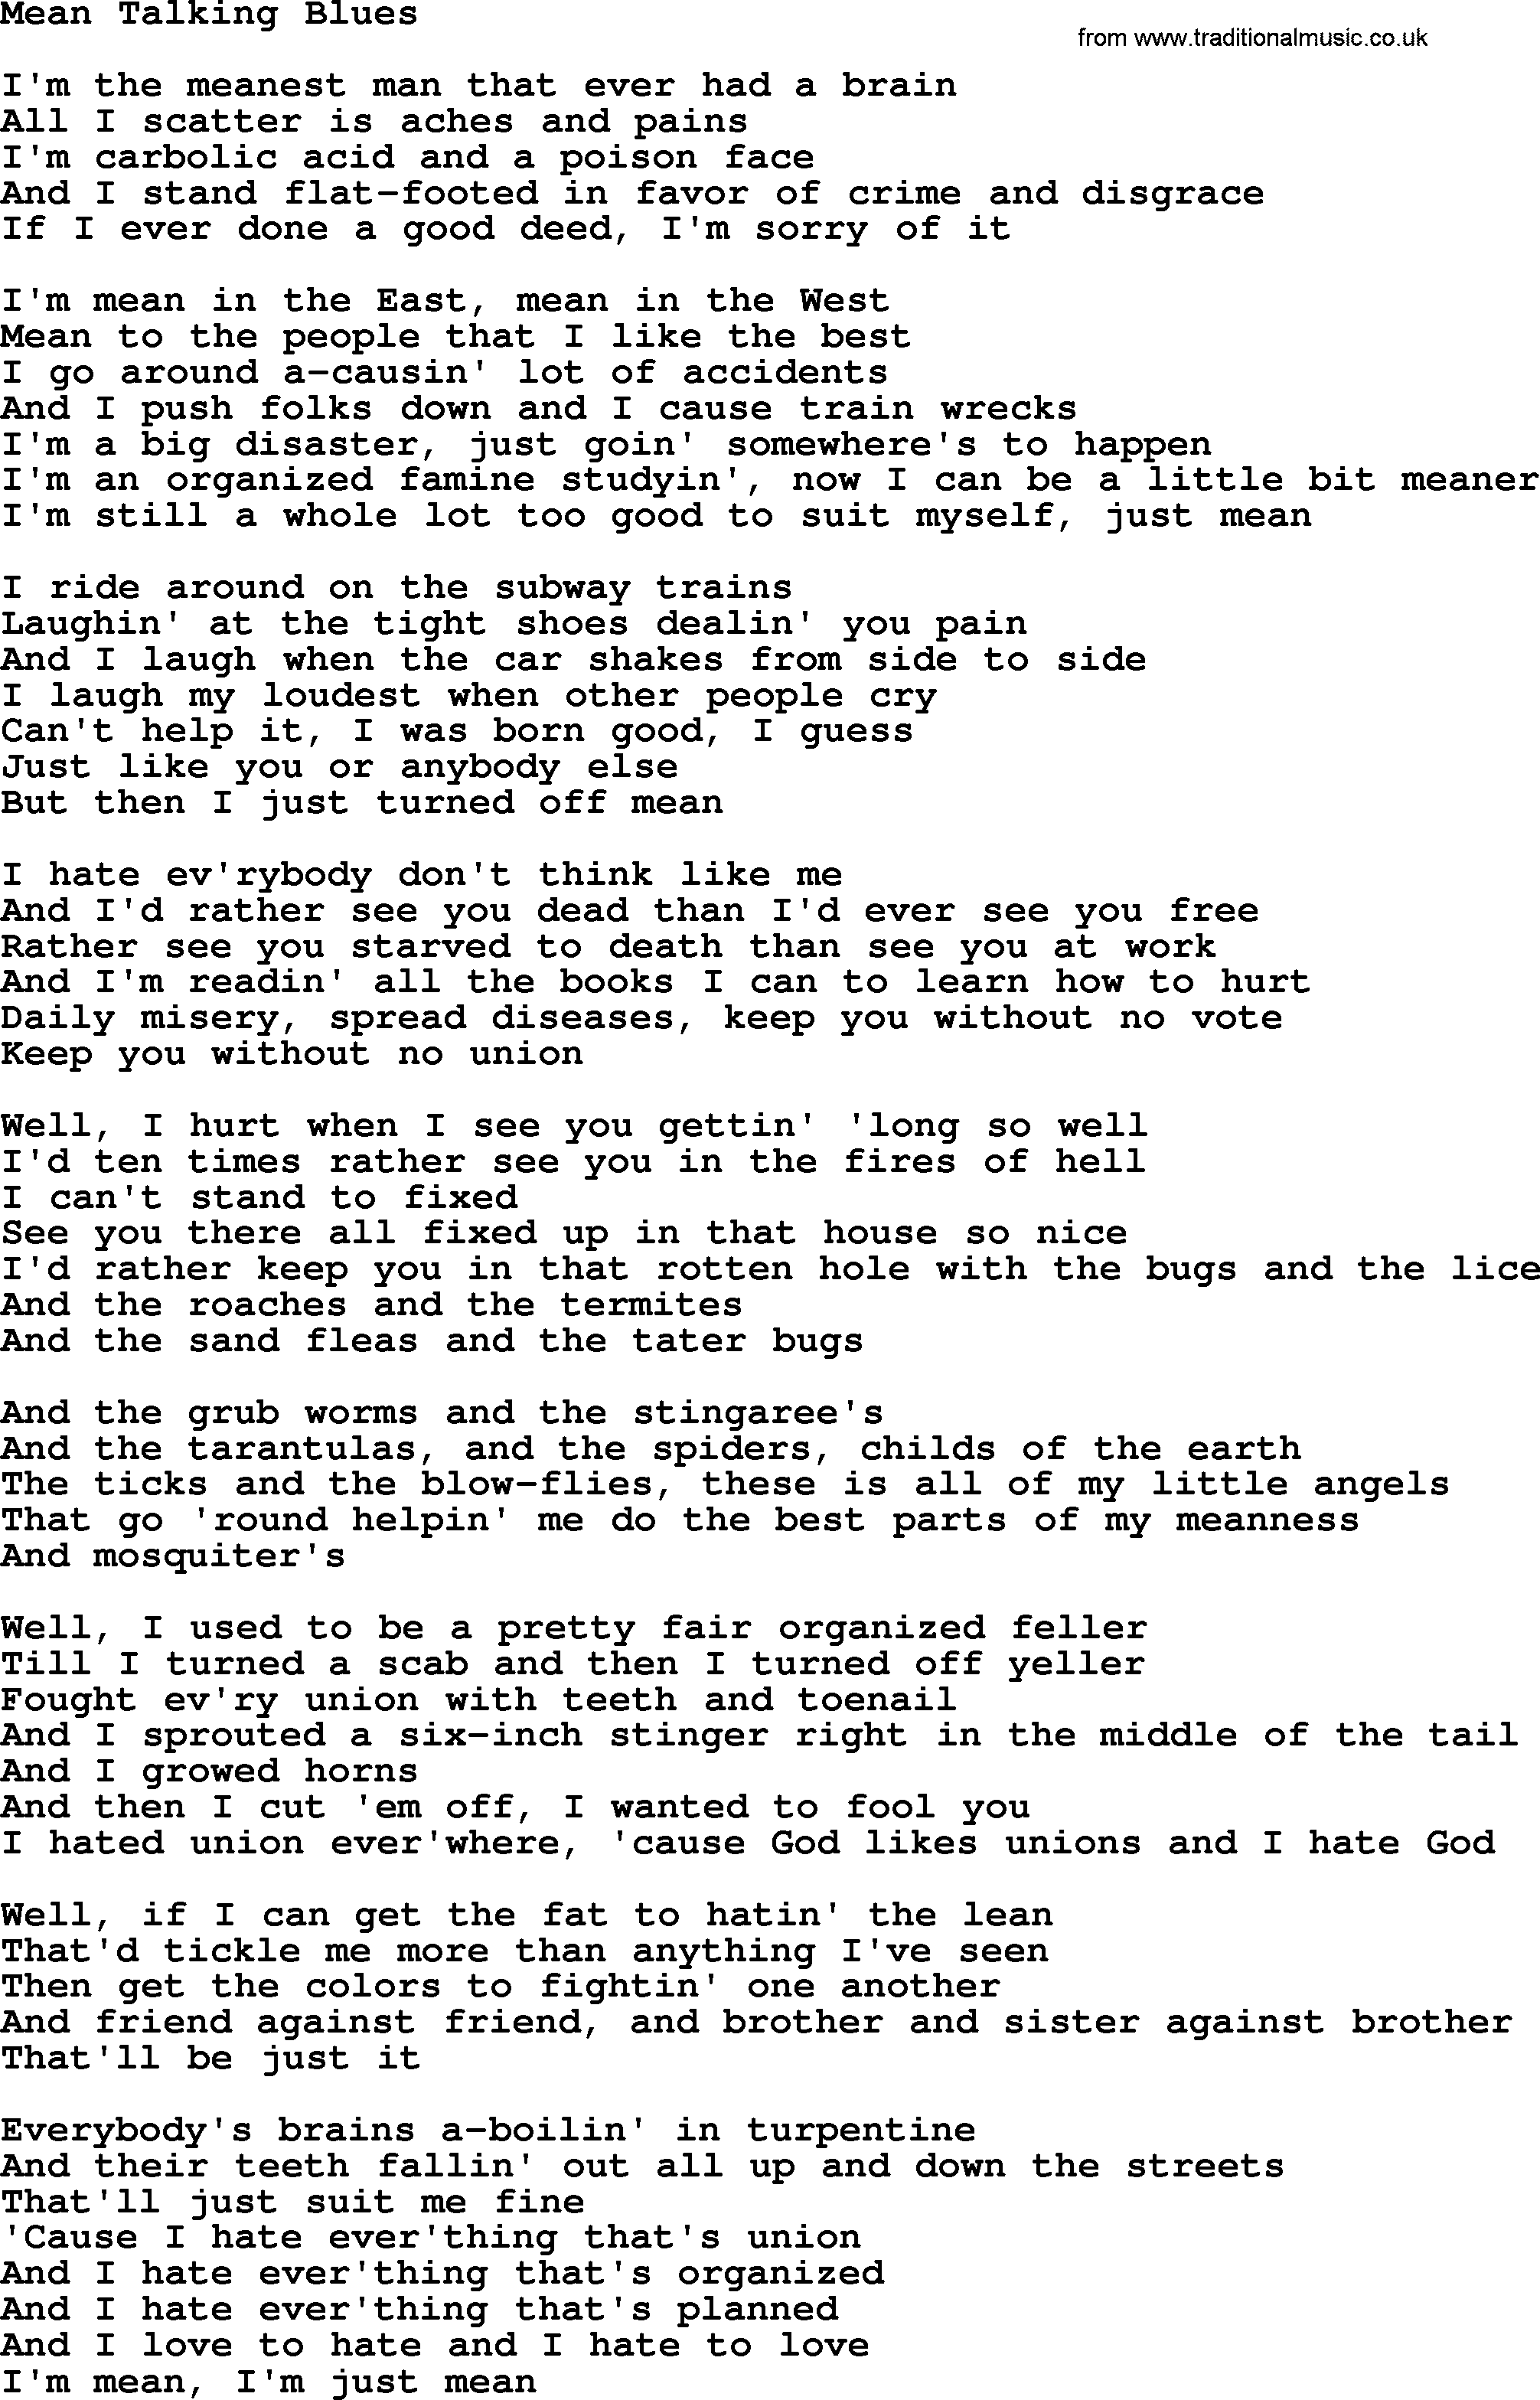 Woody Guthrie song Mean Talking Blues lyrics